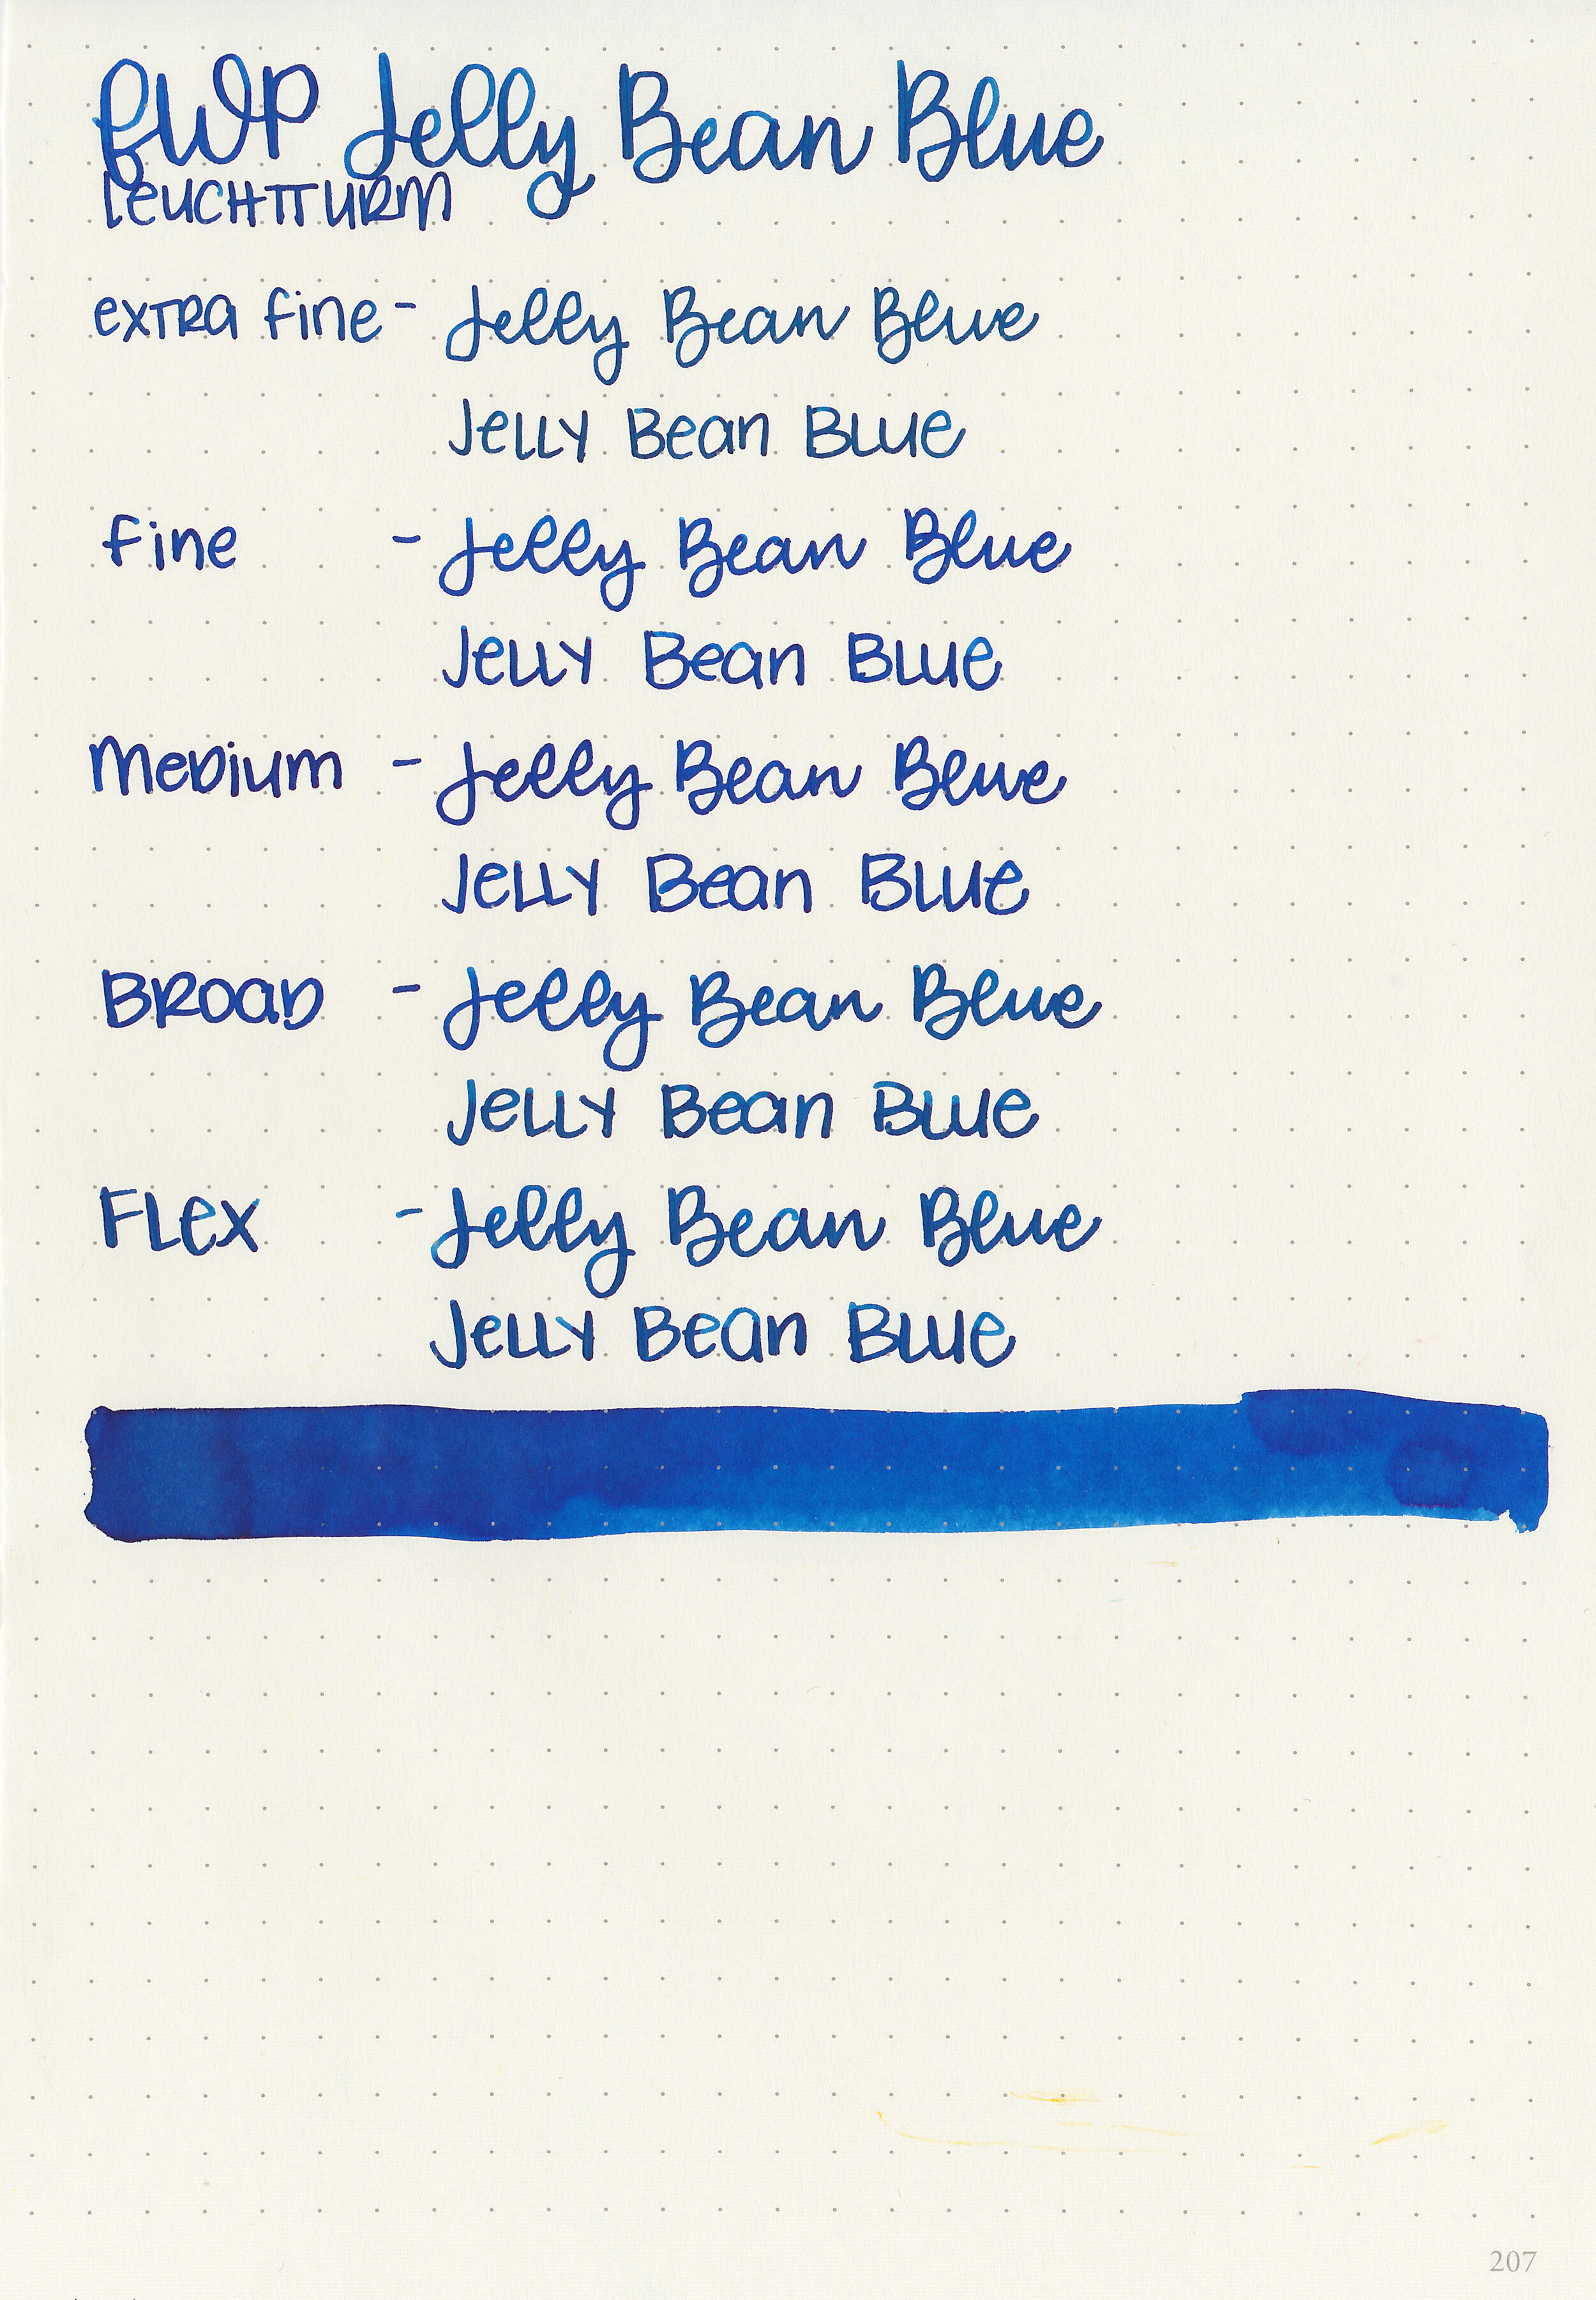 fwp-jelly-bean-blue-9.jpg